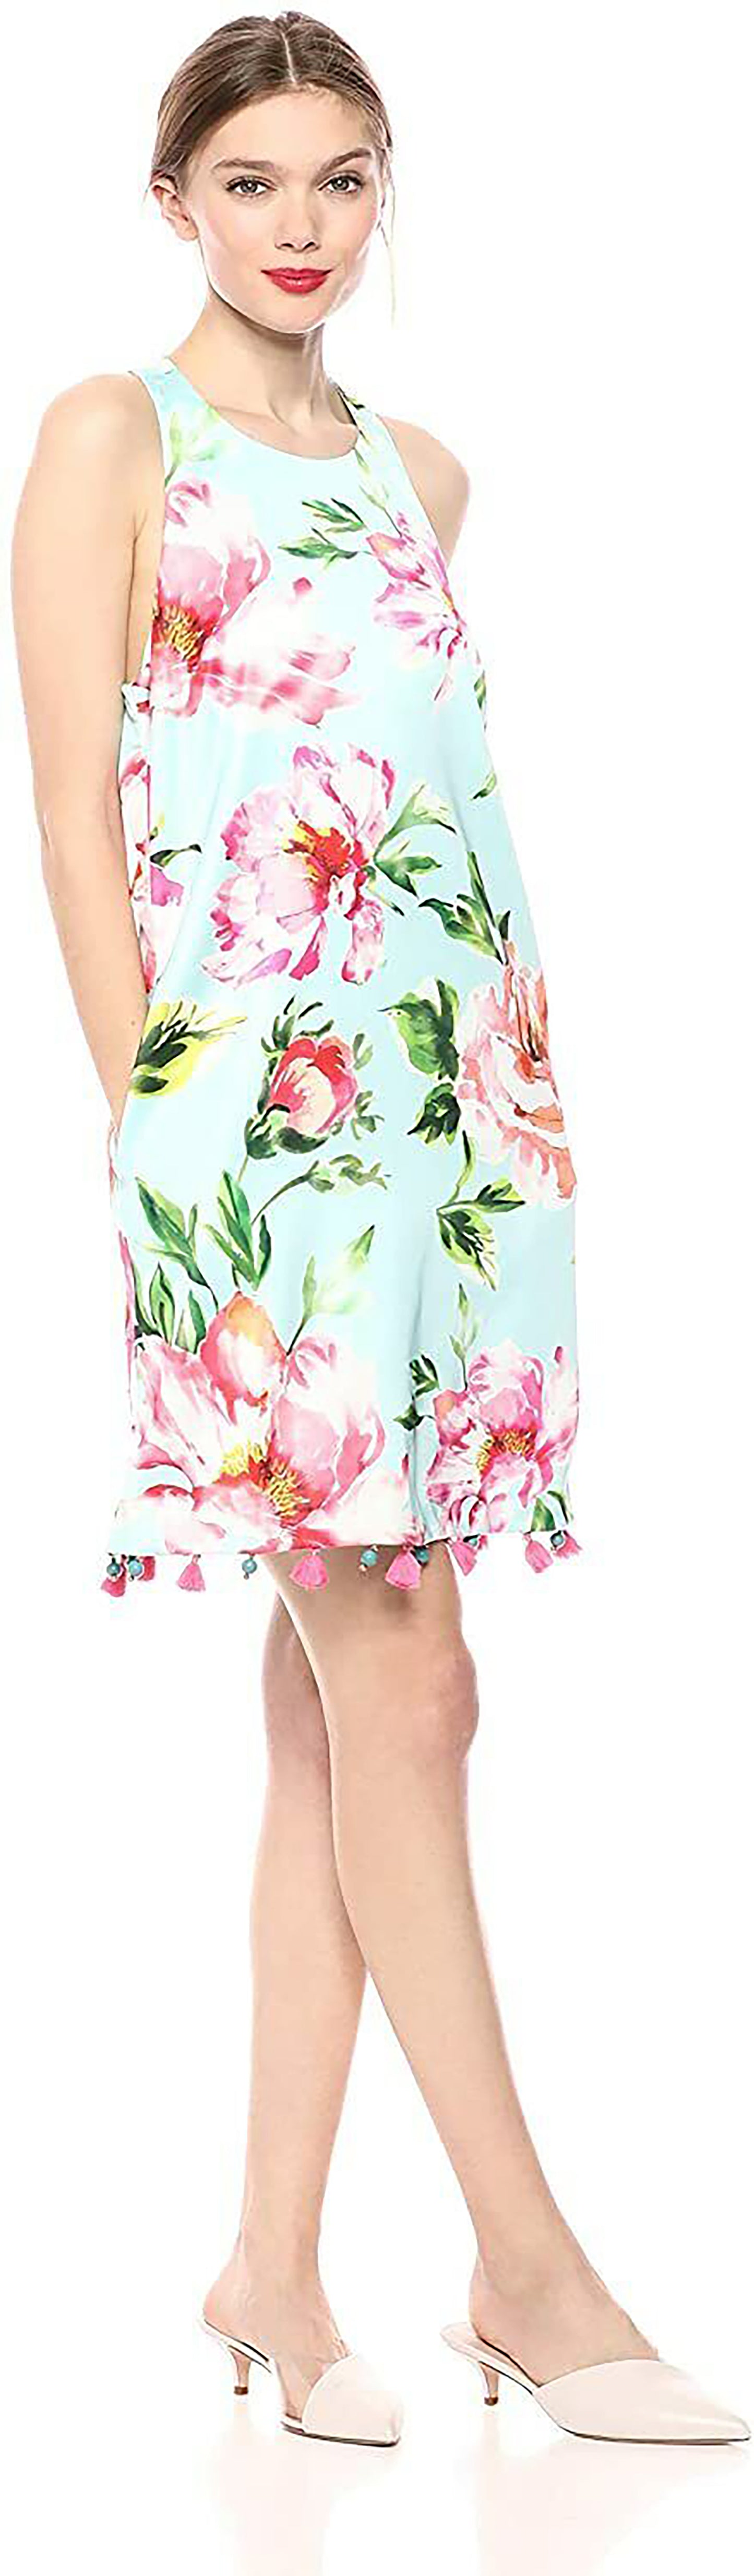 LAUNDRY BY SHELLI SEGAL Women's Aqua Fringed Floral Sleeveless Jewel Neck Dress Size 2